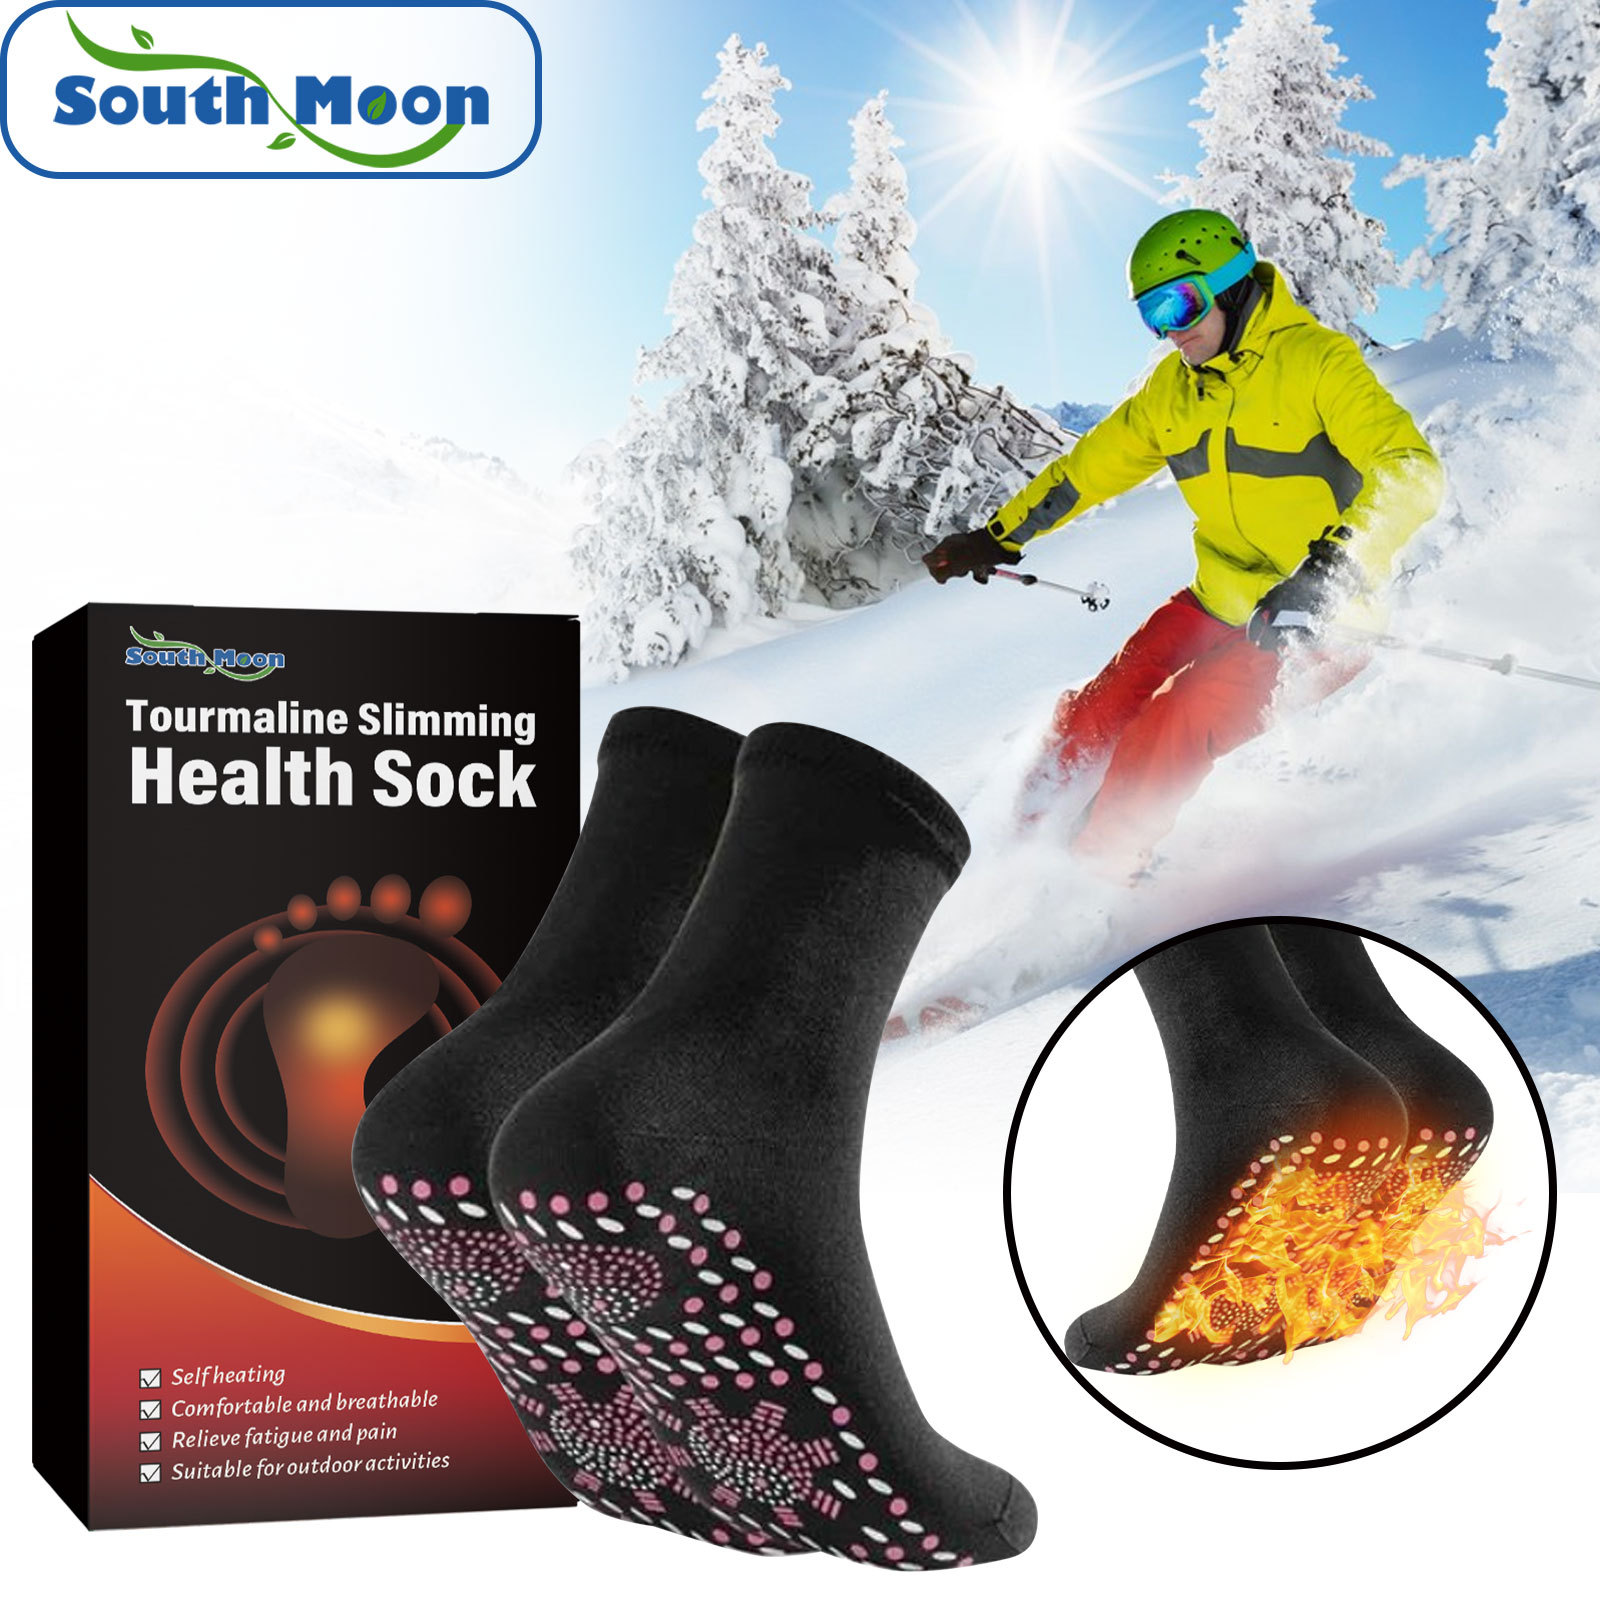 South Moon 自热按摩袜 户外滑雪自发热按摩袜亲肤透气暖足防寒袜详情图1